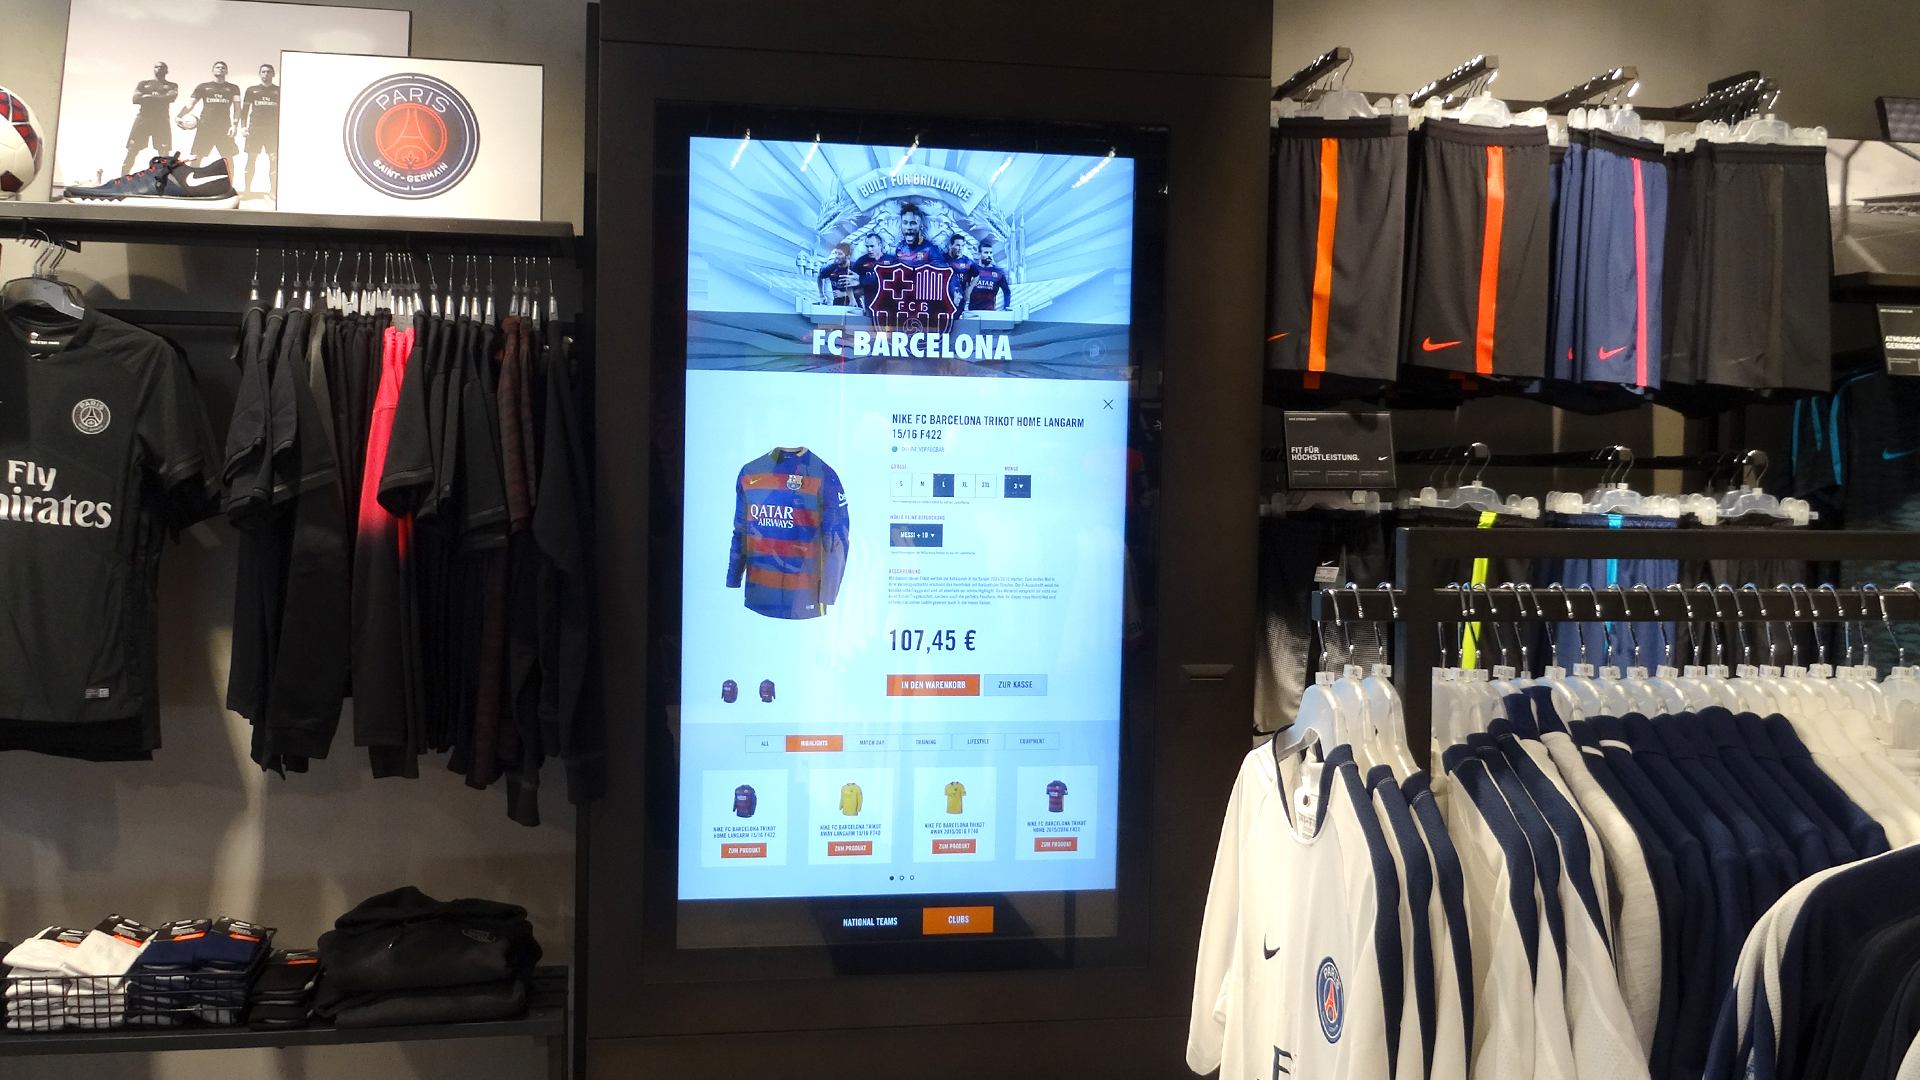 nike digital retail experience replica kiosk auf 4k multitouch display